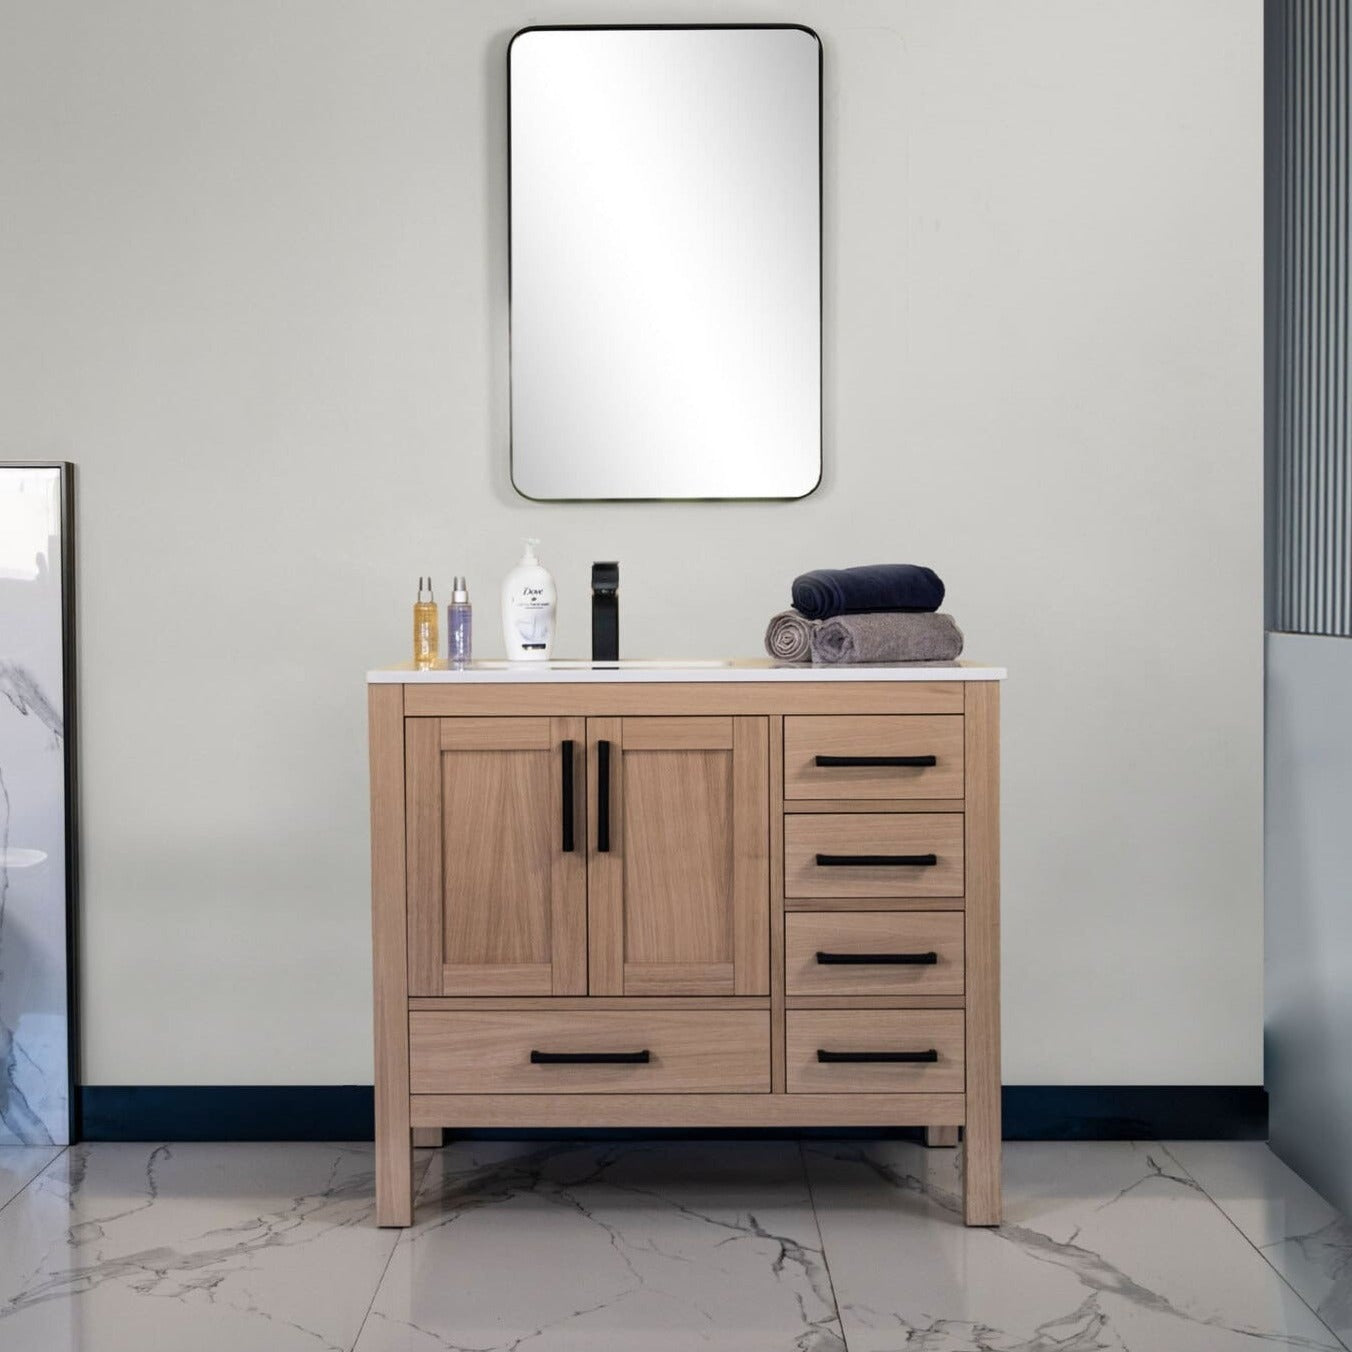 Ahley Bathroom Vanity Homelero 36"  #size_36"  #color_natural oak  #hardware_brass